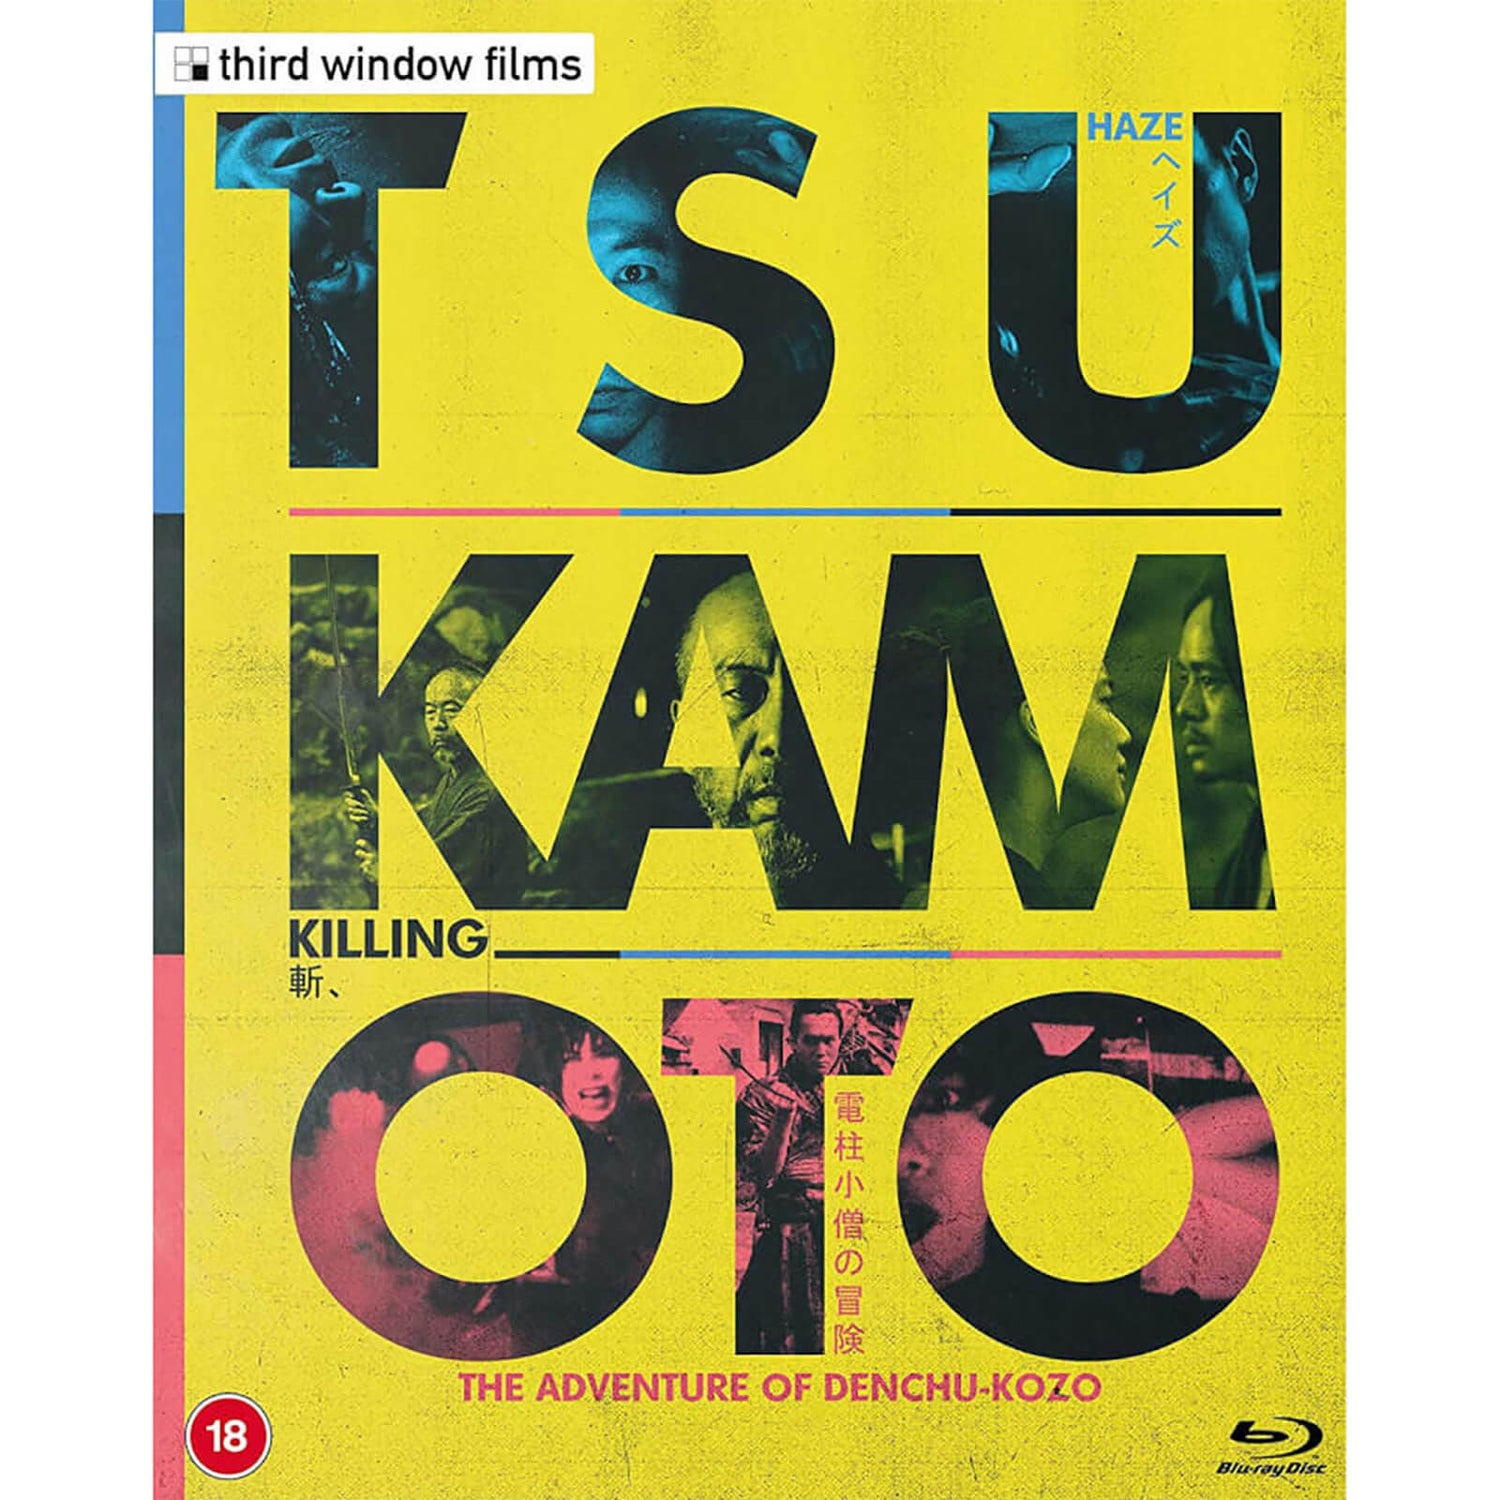 Tsukamoto: Killing / Haze / Denchu - Kozo (Limited Edition)